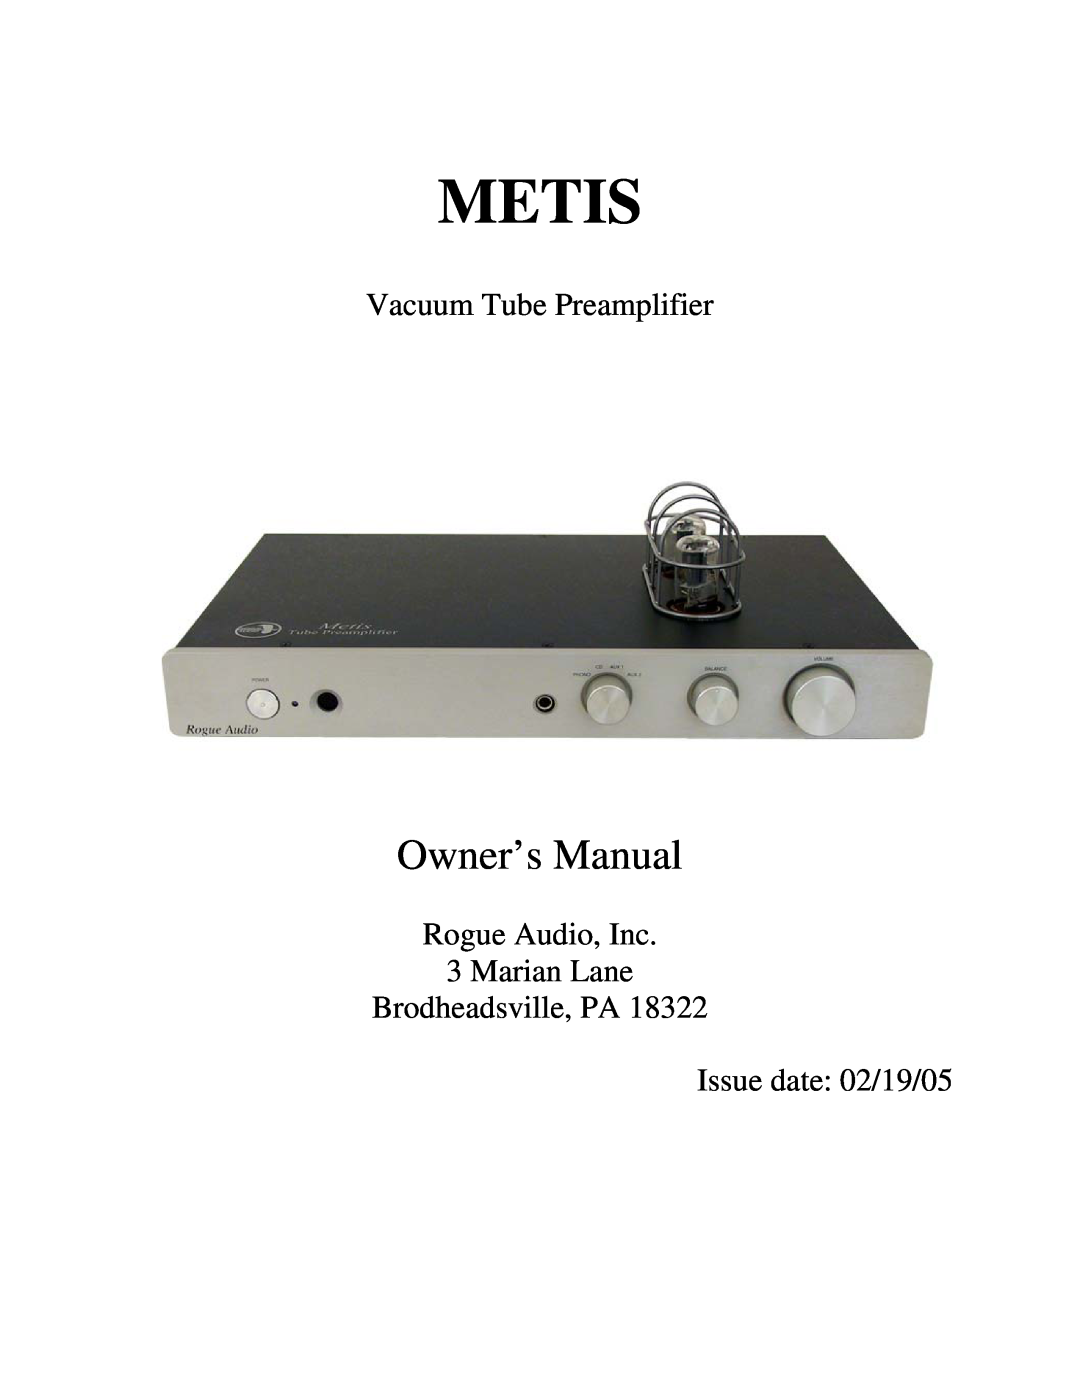 Rogue Audio METIS Vacuum Tube Preamplifier owner manual Metis, Rogue Audio, Inc 3 Marian Lane Brodheadsville, PA 